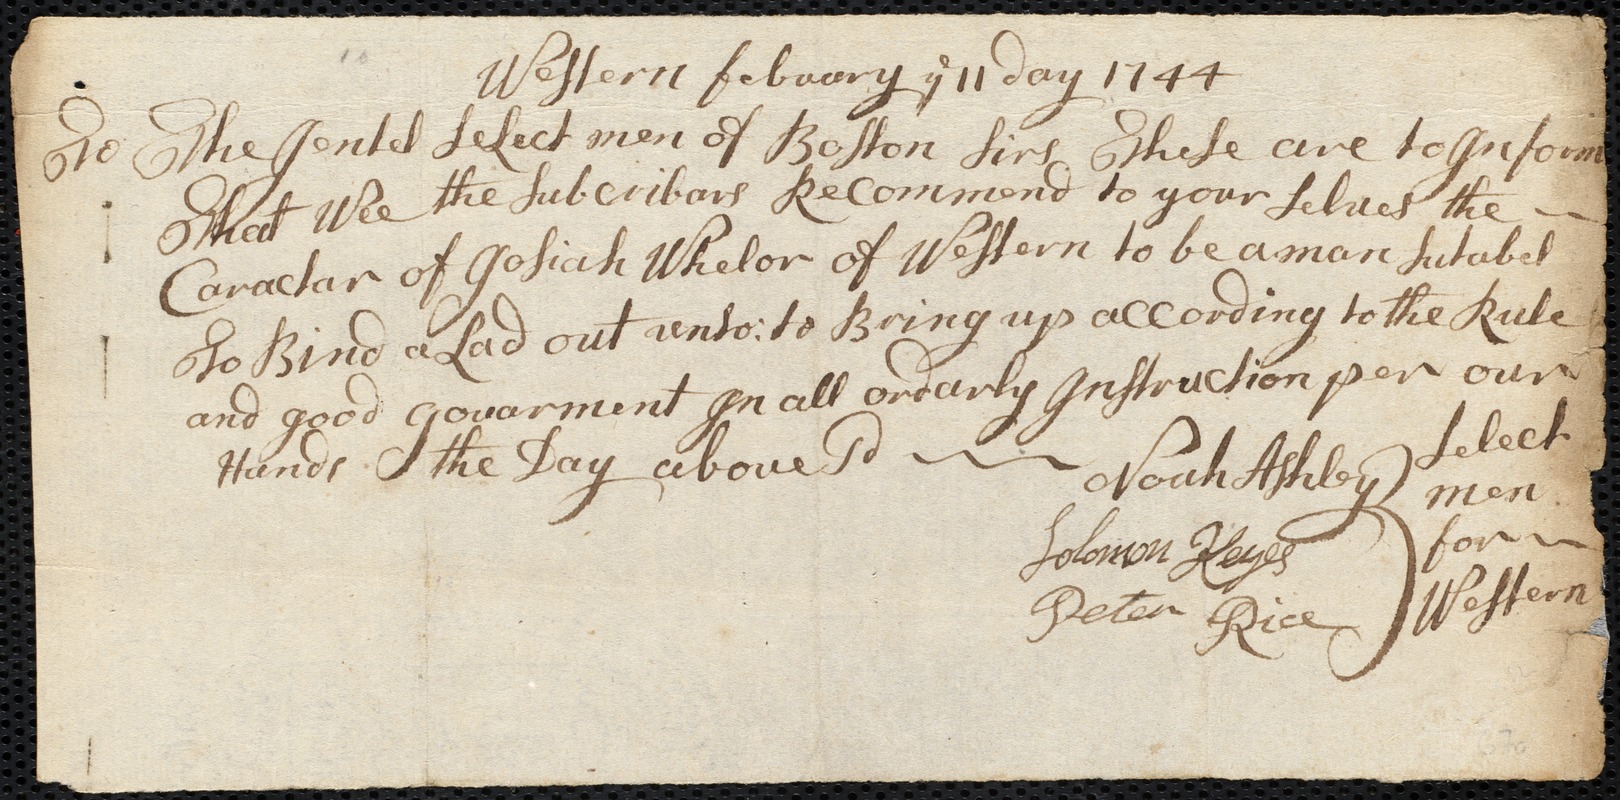 Timothy Bowen indentured to apprentice with Josiah Wheeler [Josia Wheler] of Western, 6 February 1744